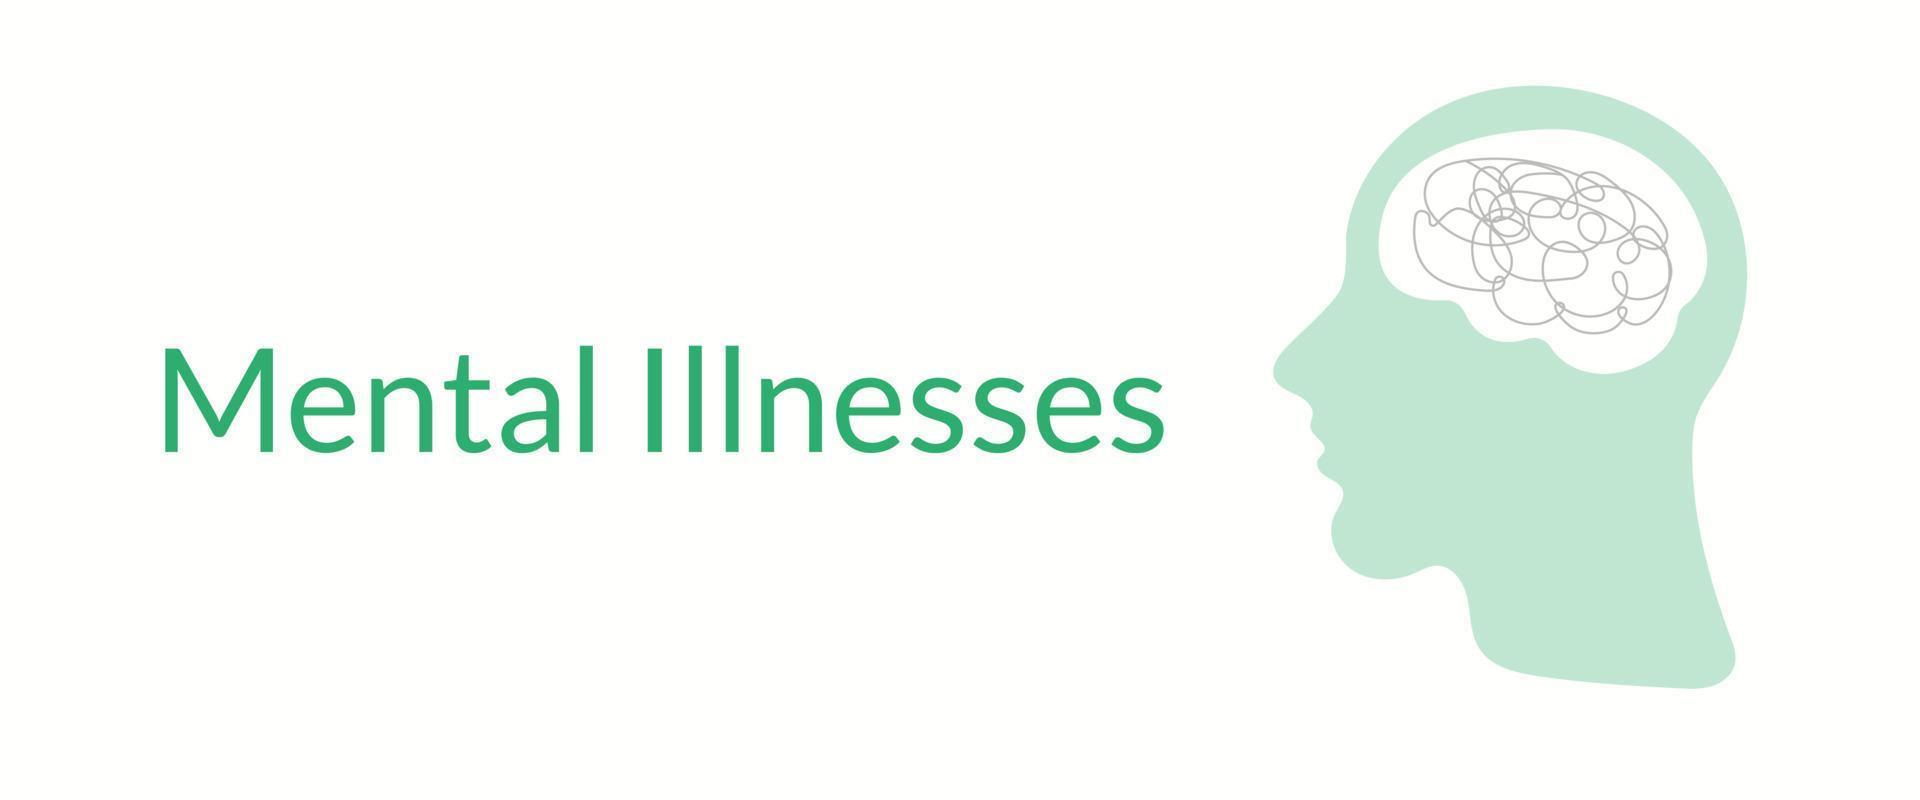 Mental Illnesses Vector Banner Psychological Wellness